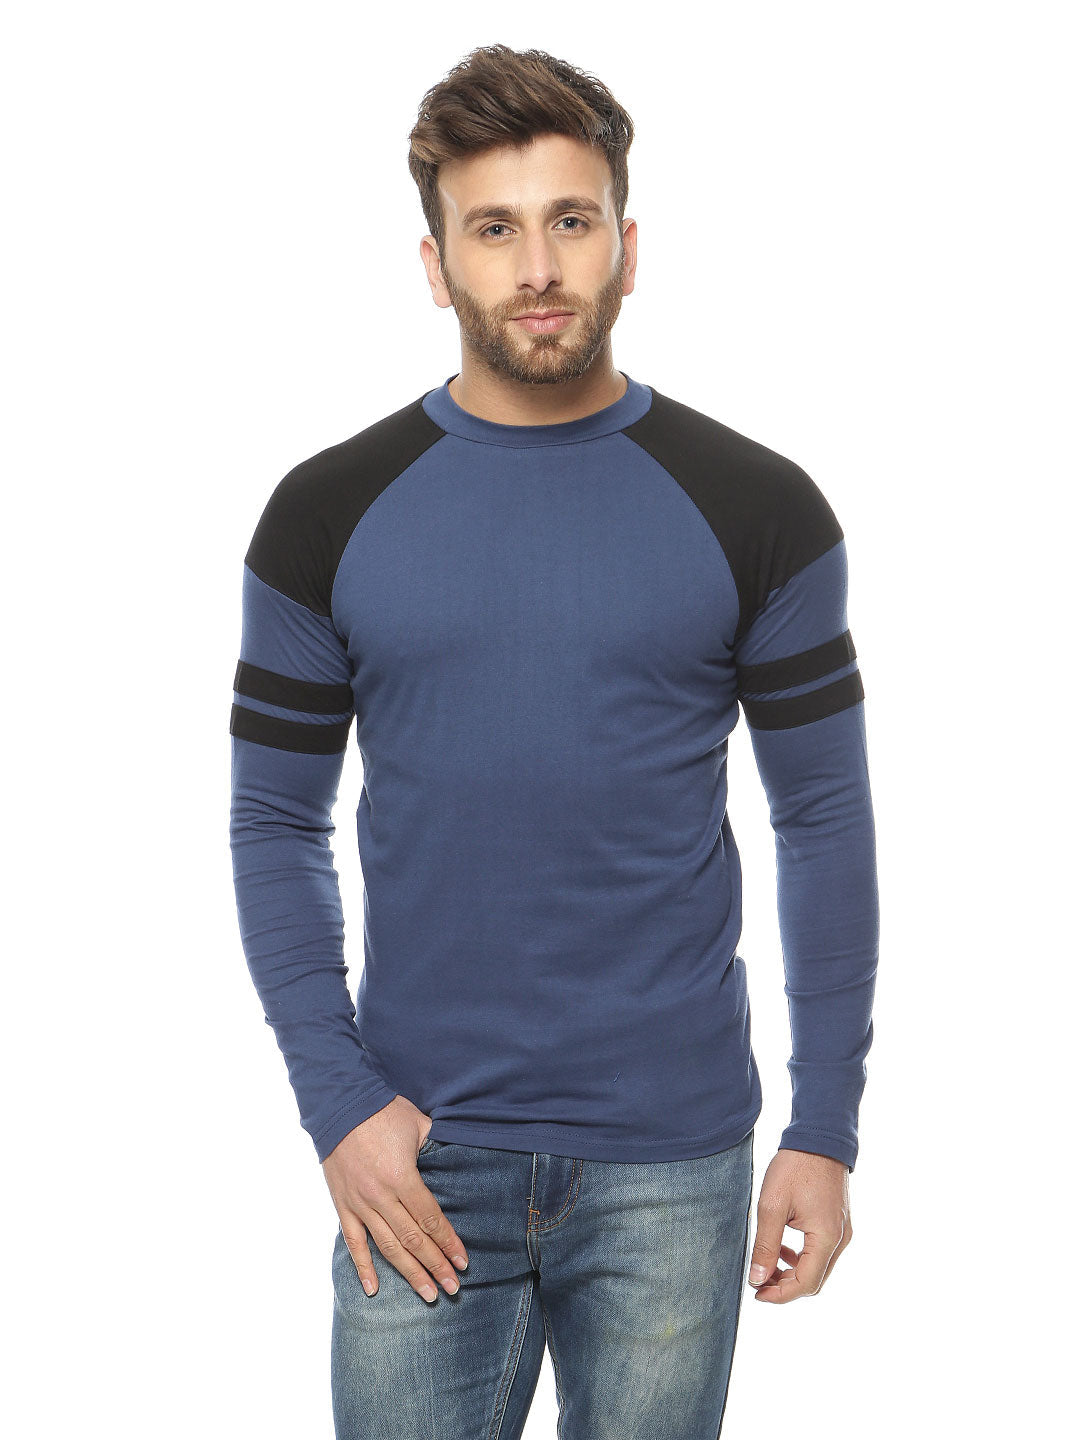 New Blue/Black Full Sleeve Round Neck T-Shirt